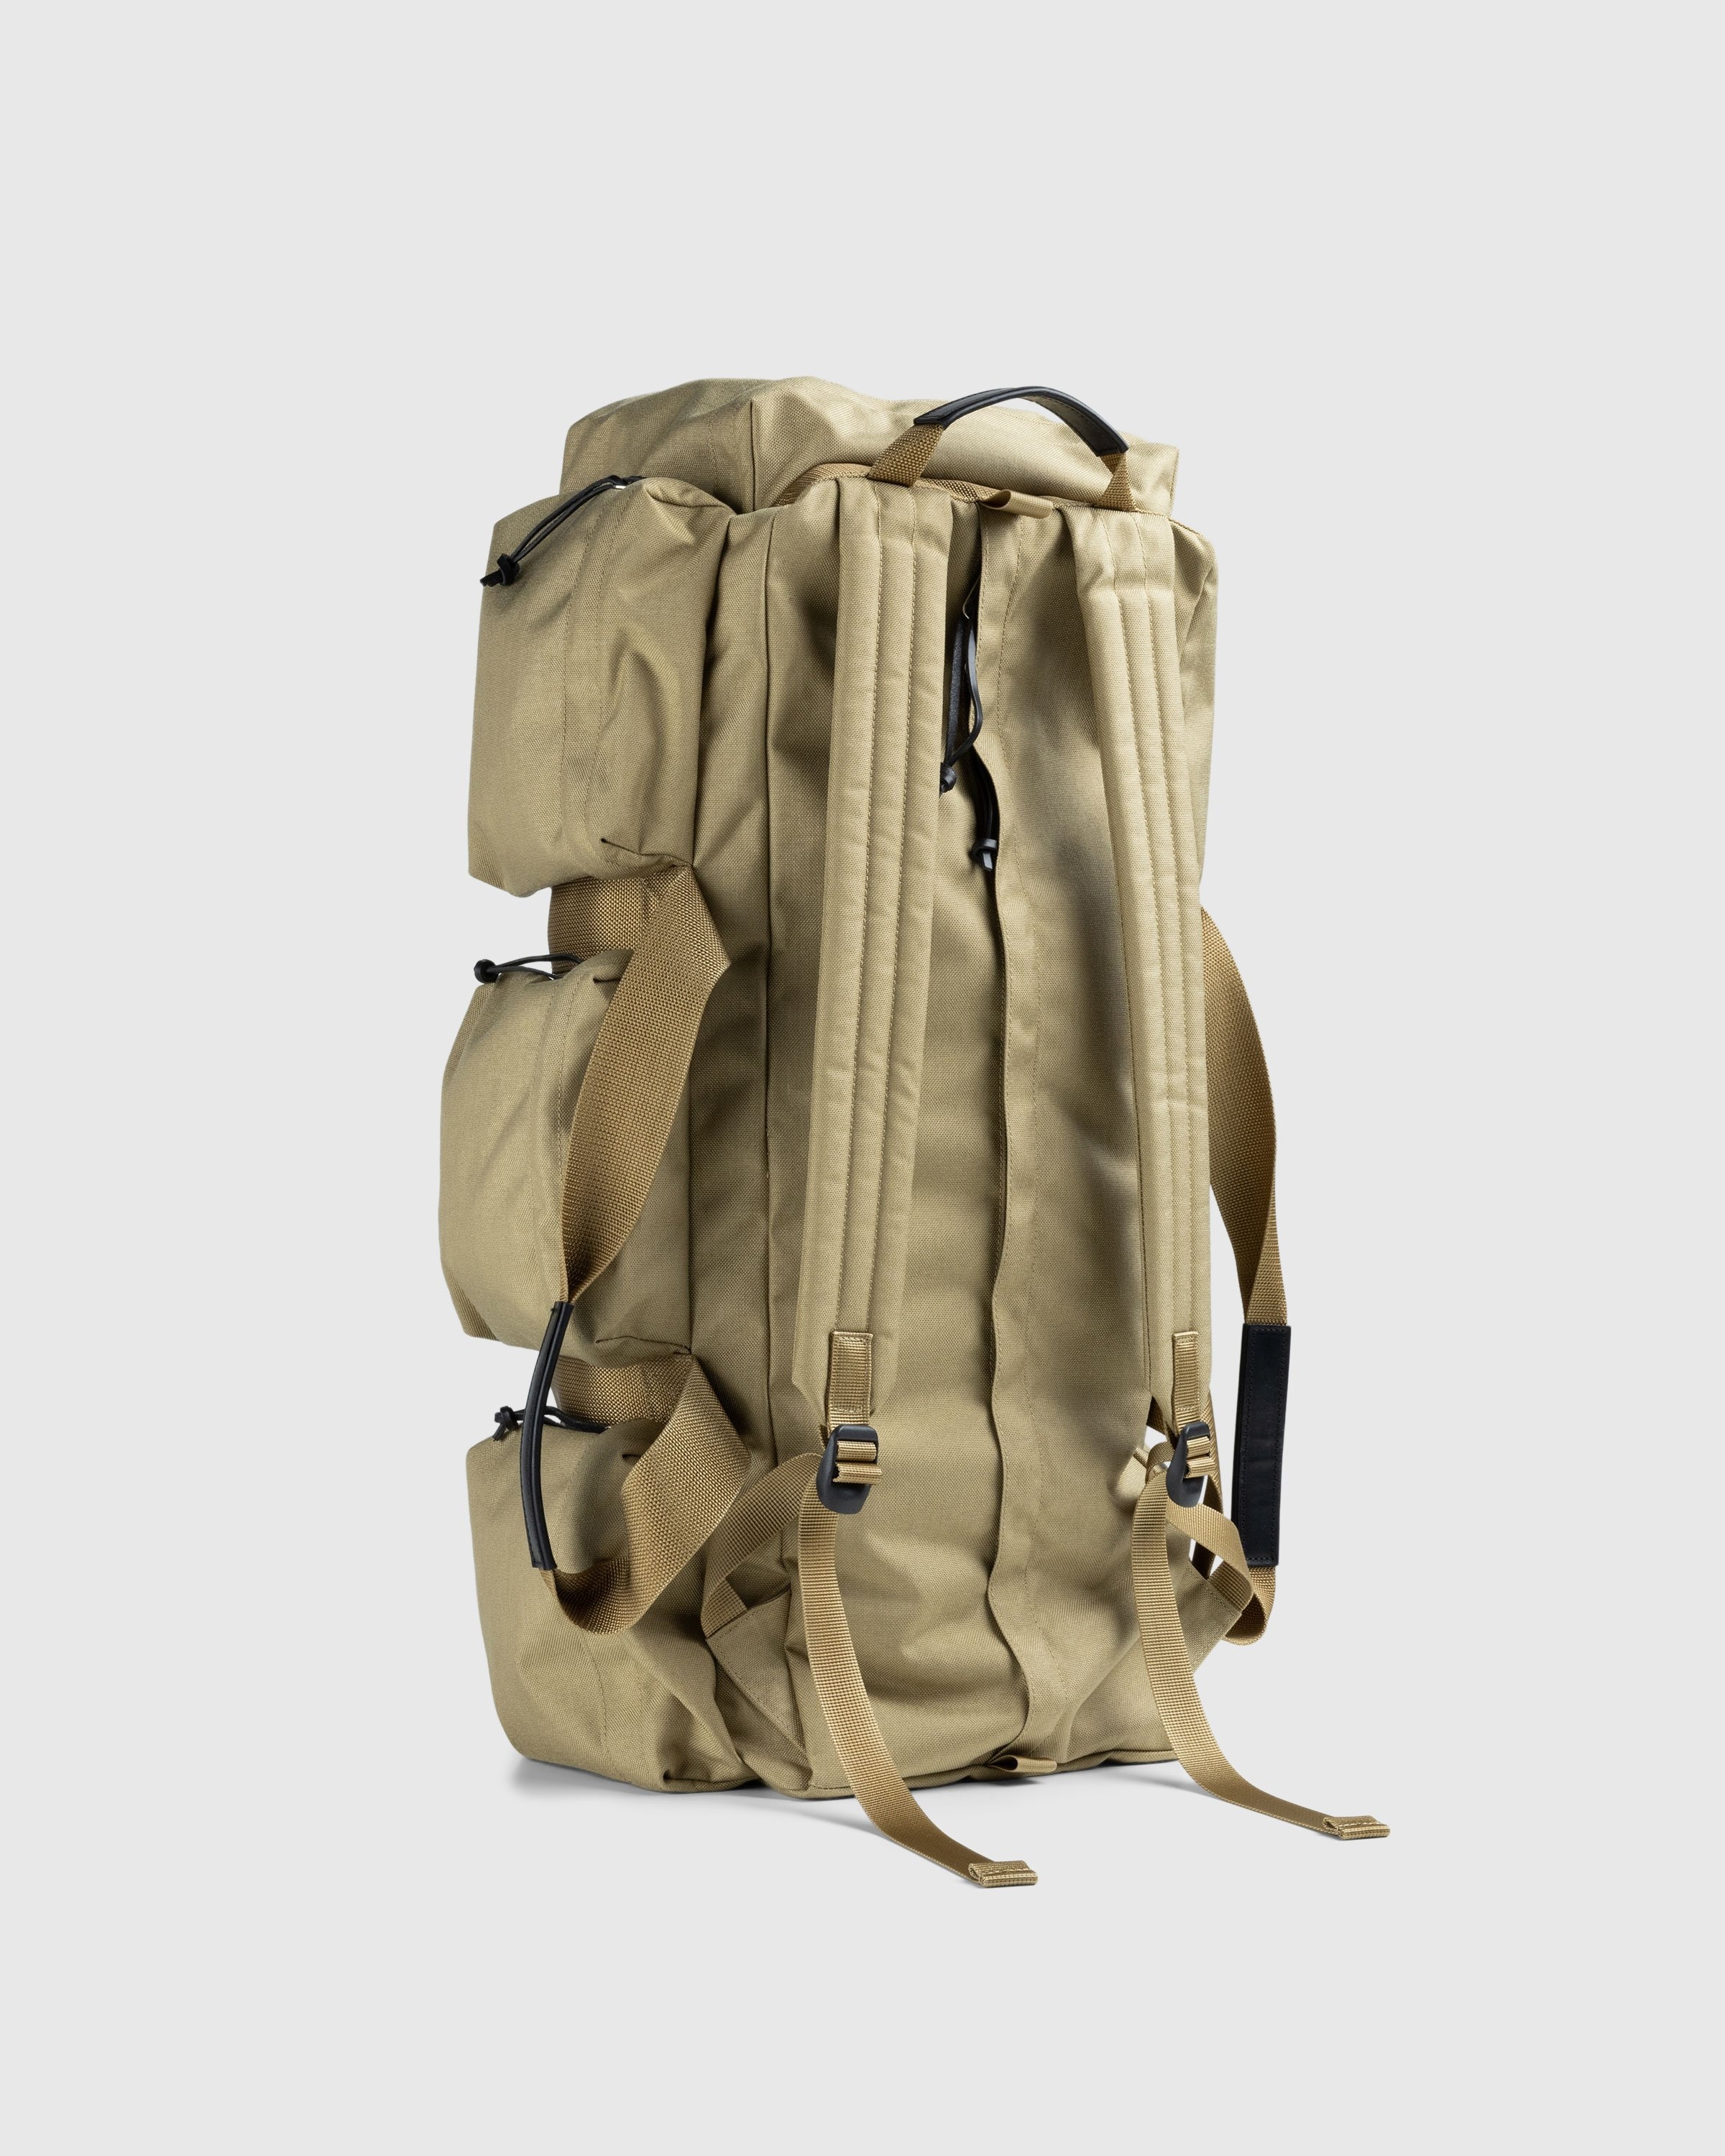 Auralee – Boston Bag Made By Aeta Beige | Highsnobiety Shop